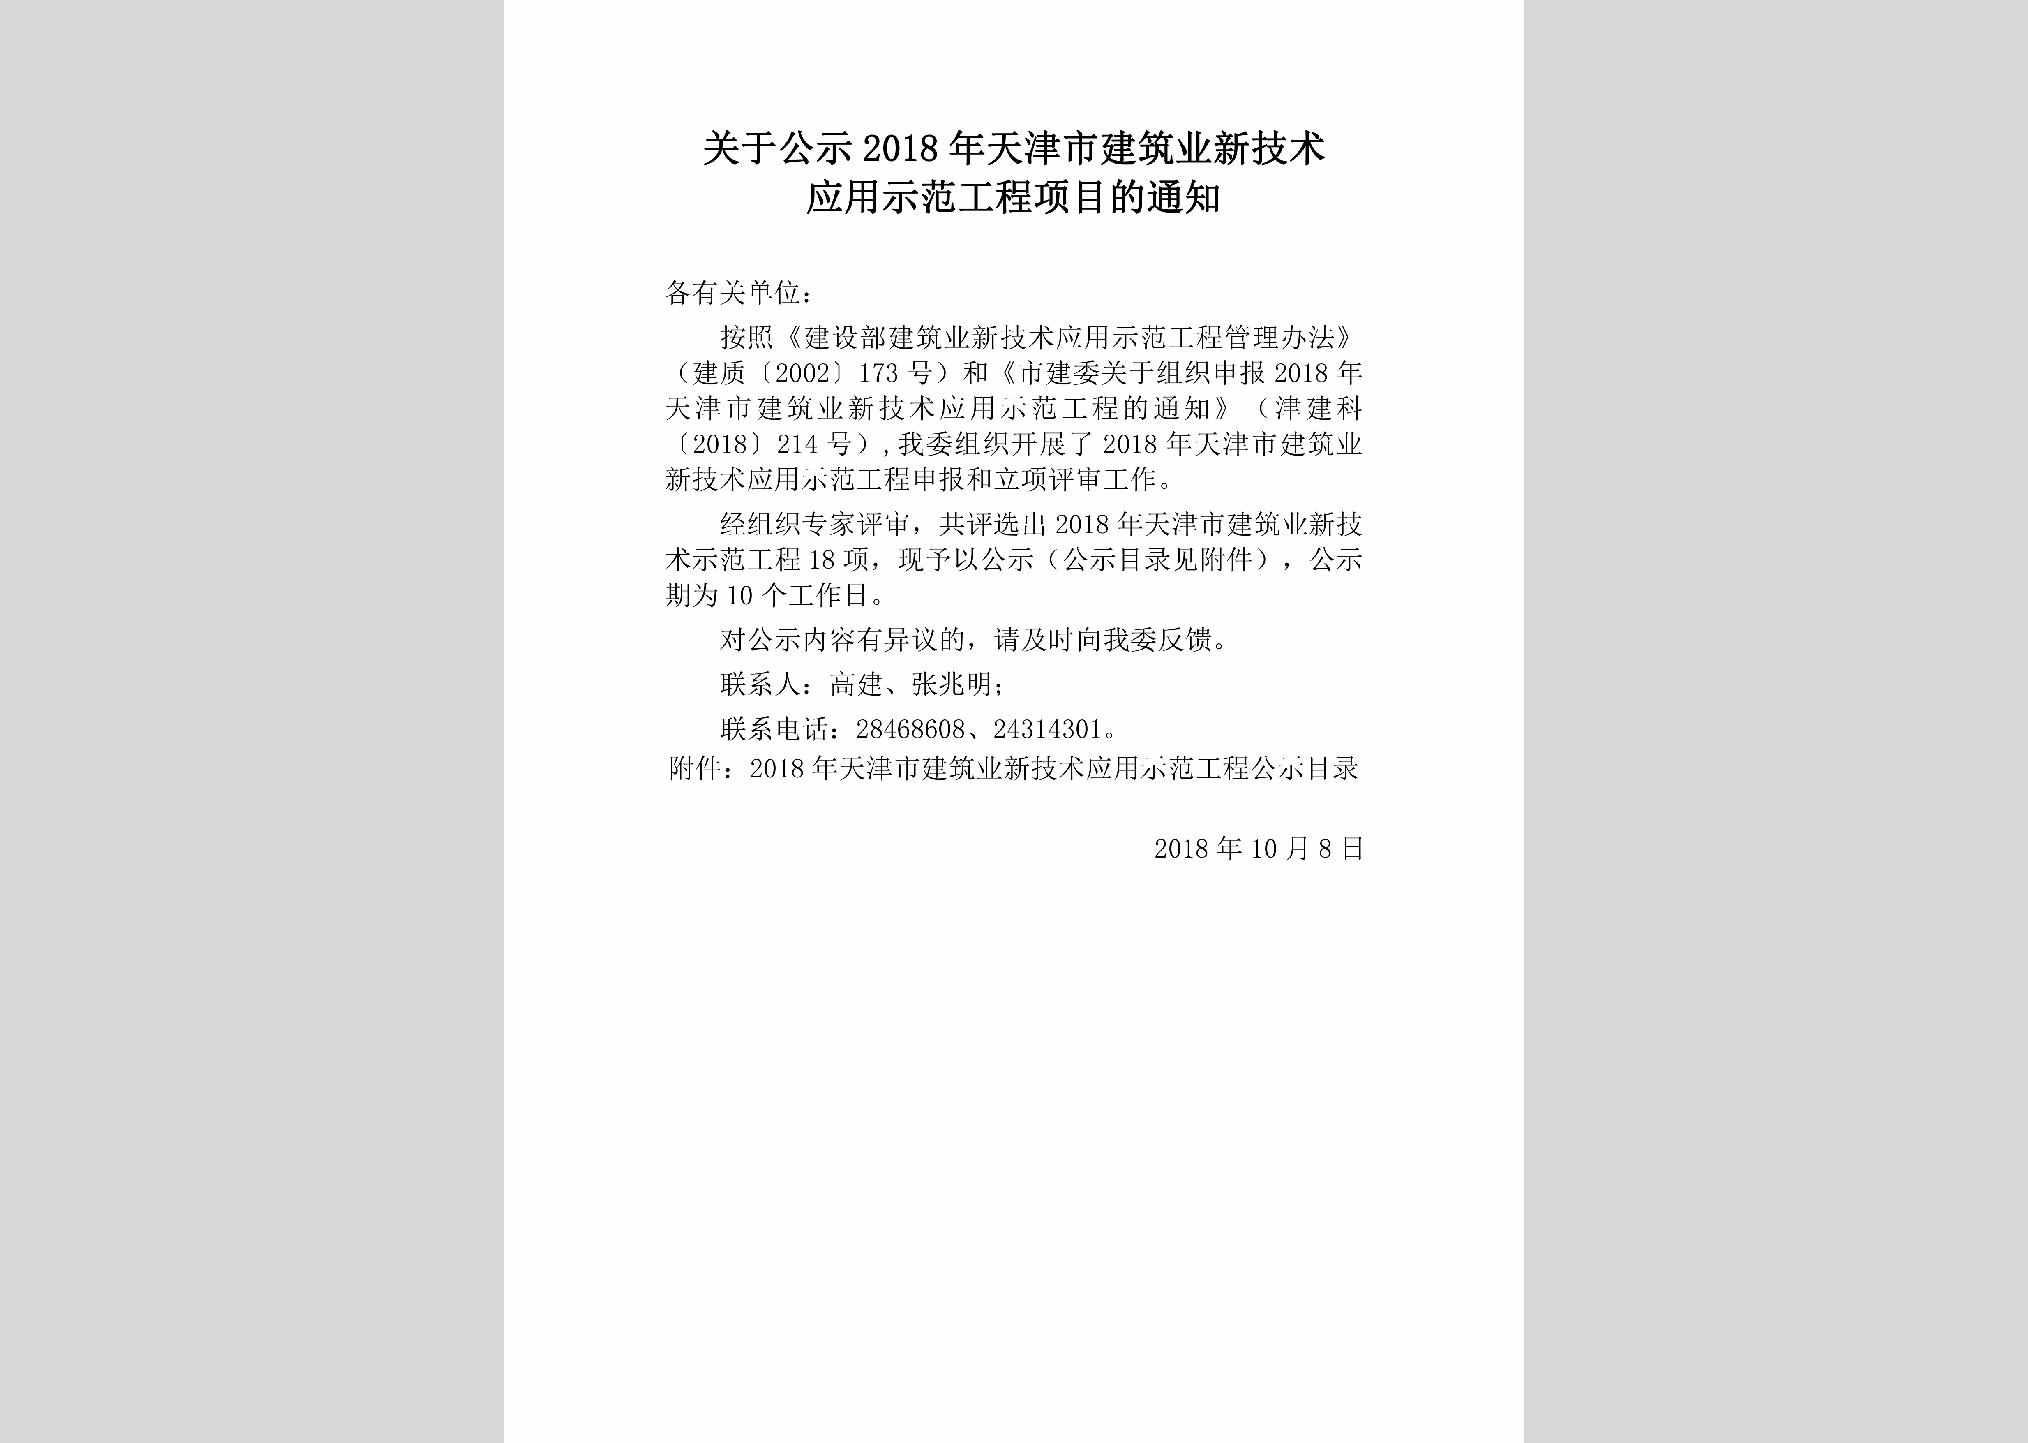 TJ-HZSFGCXM-2018：关于公示2018年天津市建筑业新技术应用示范工程项目的通知